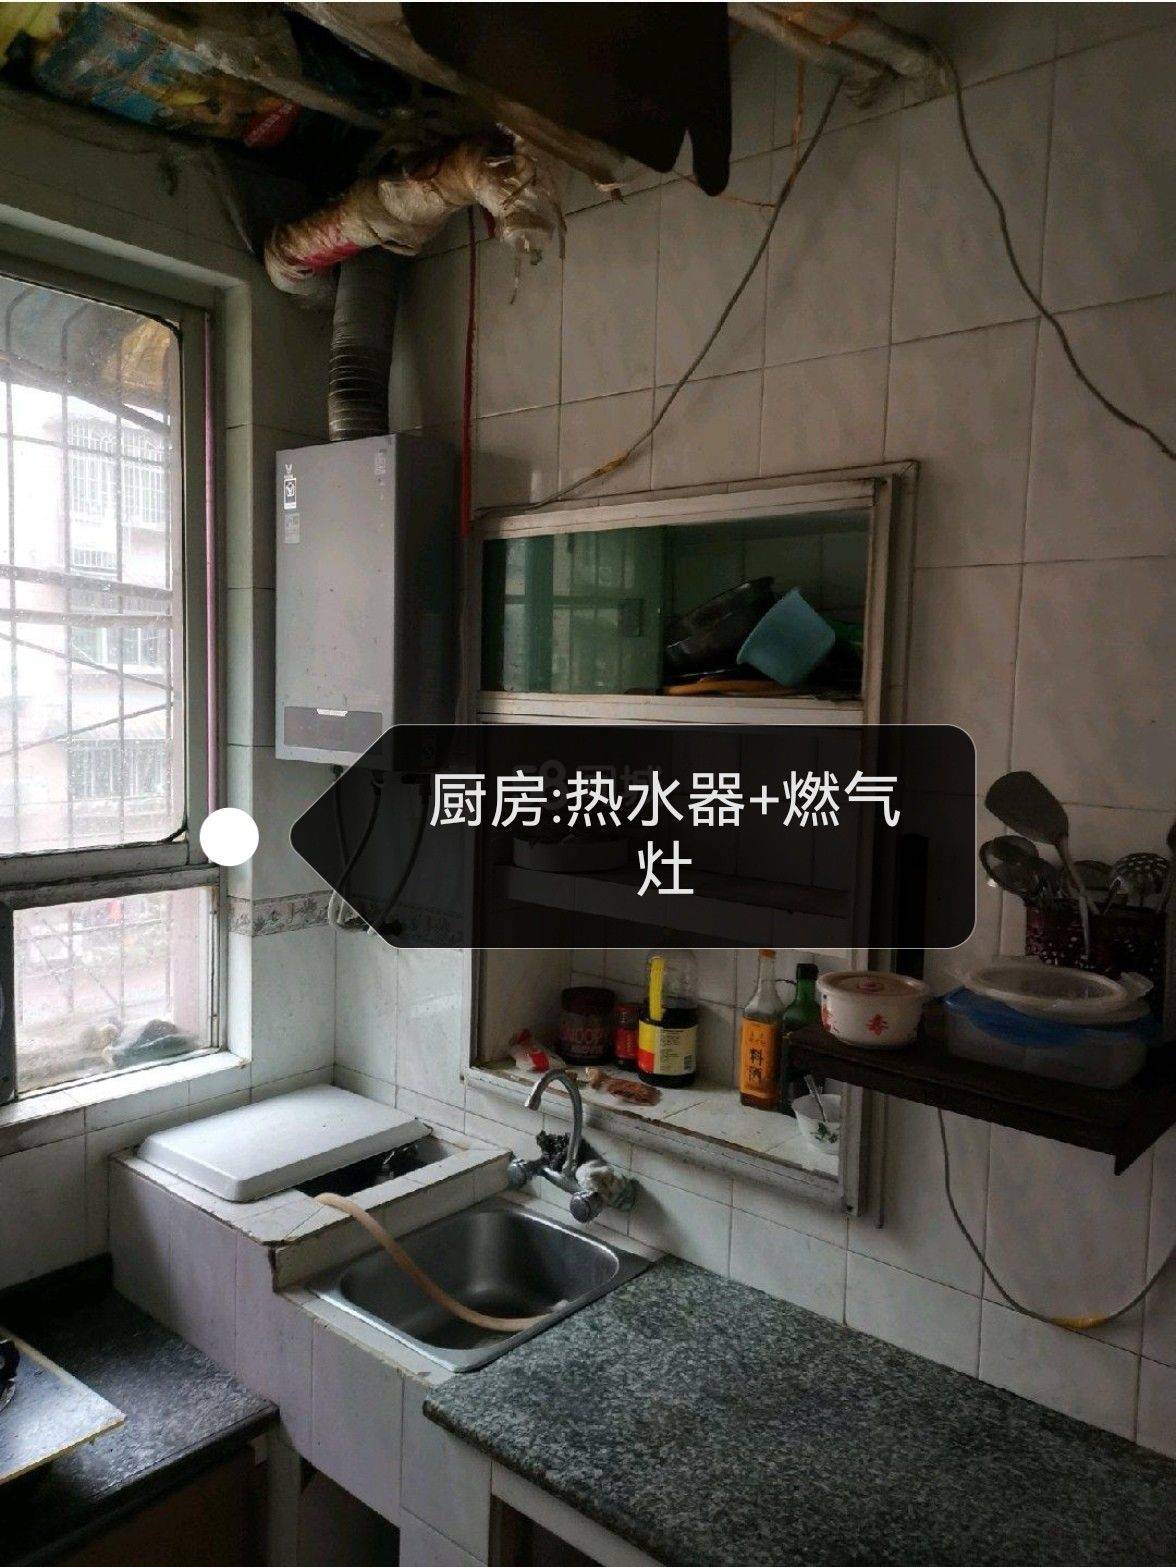 Chongqing-Yubei-Cozy Home,Clean&Comfy,No Gender Limit,Hustle & Bustle,“Friends”,Chilled,LGBTQ Friendly,Pet Friendly